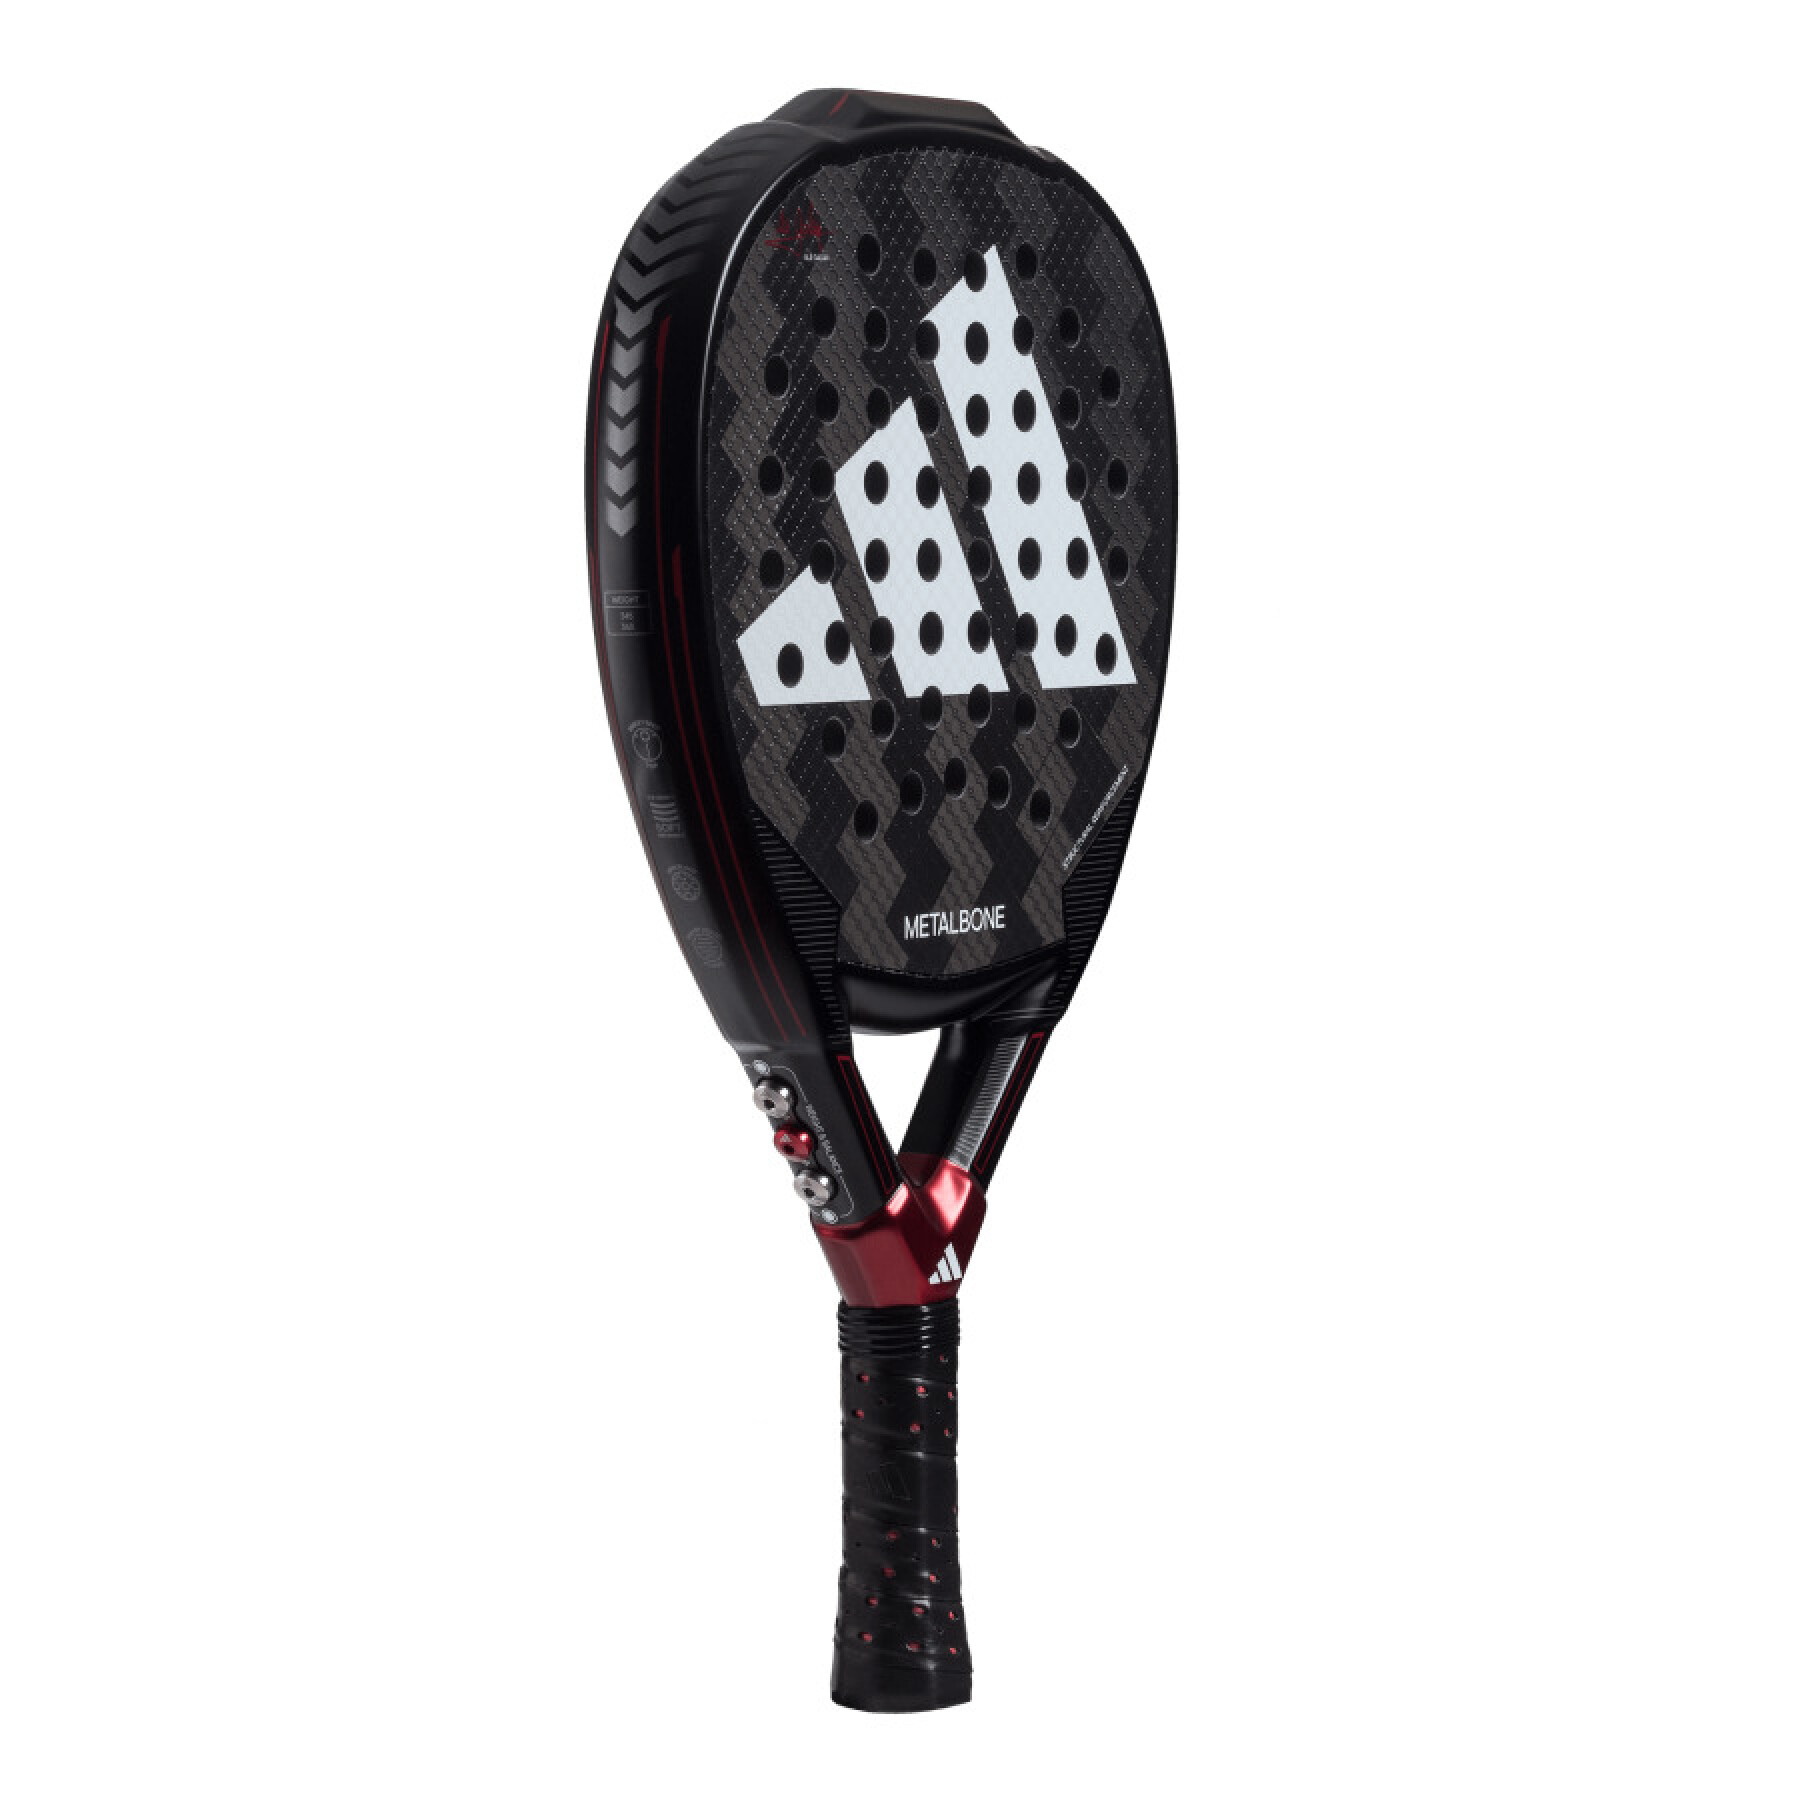 Paddle racket adidas Metalbone 3.3